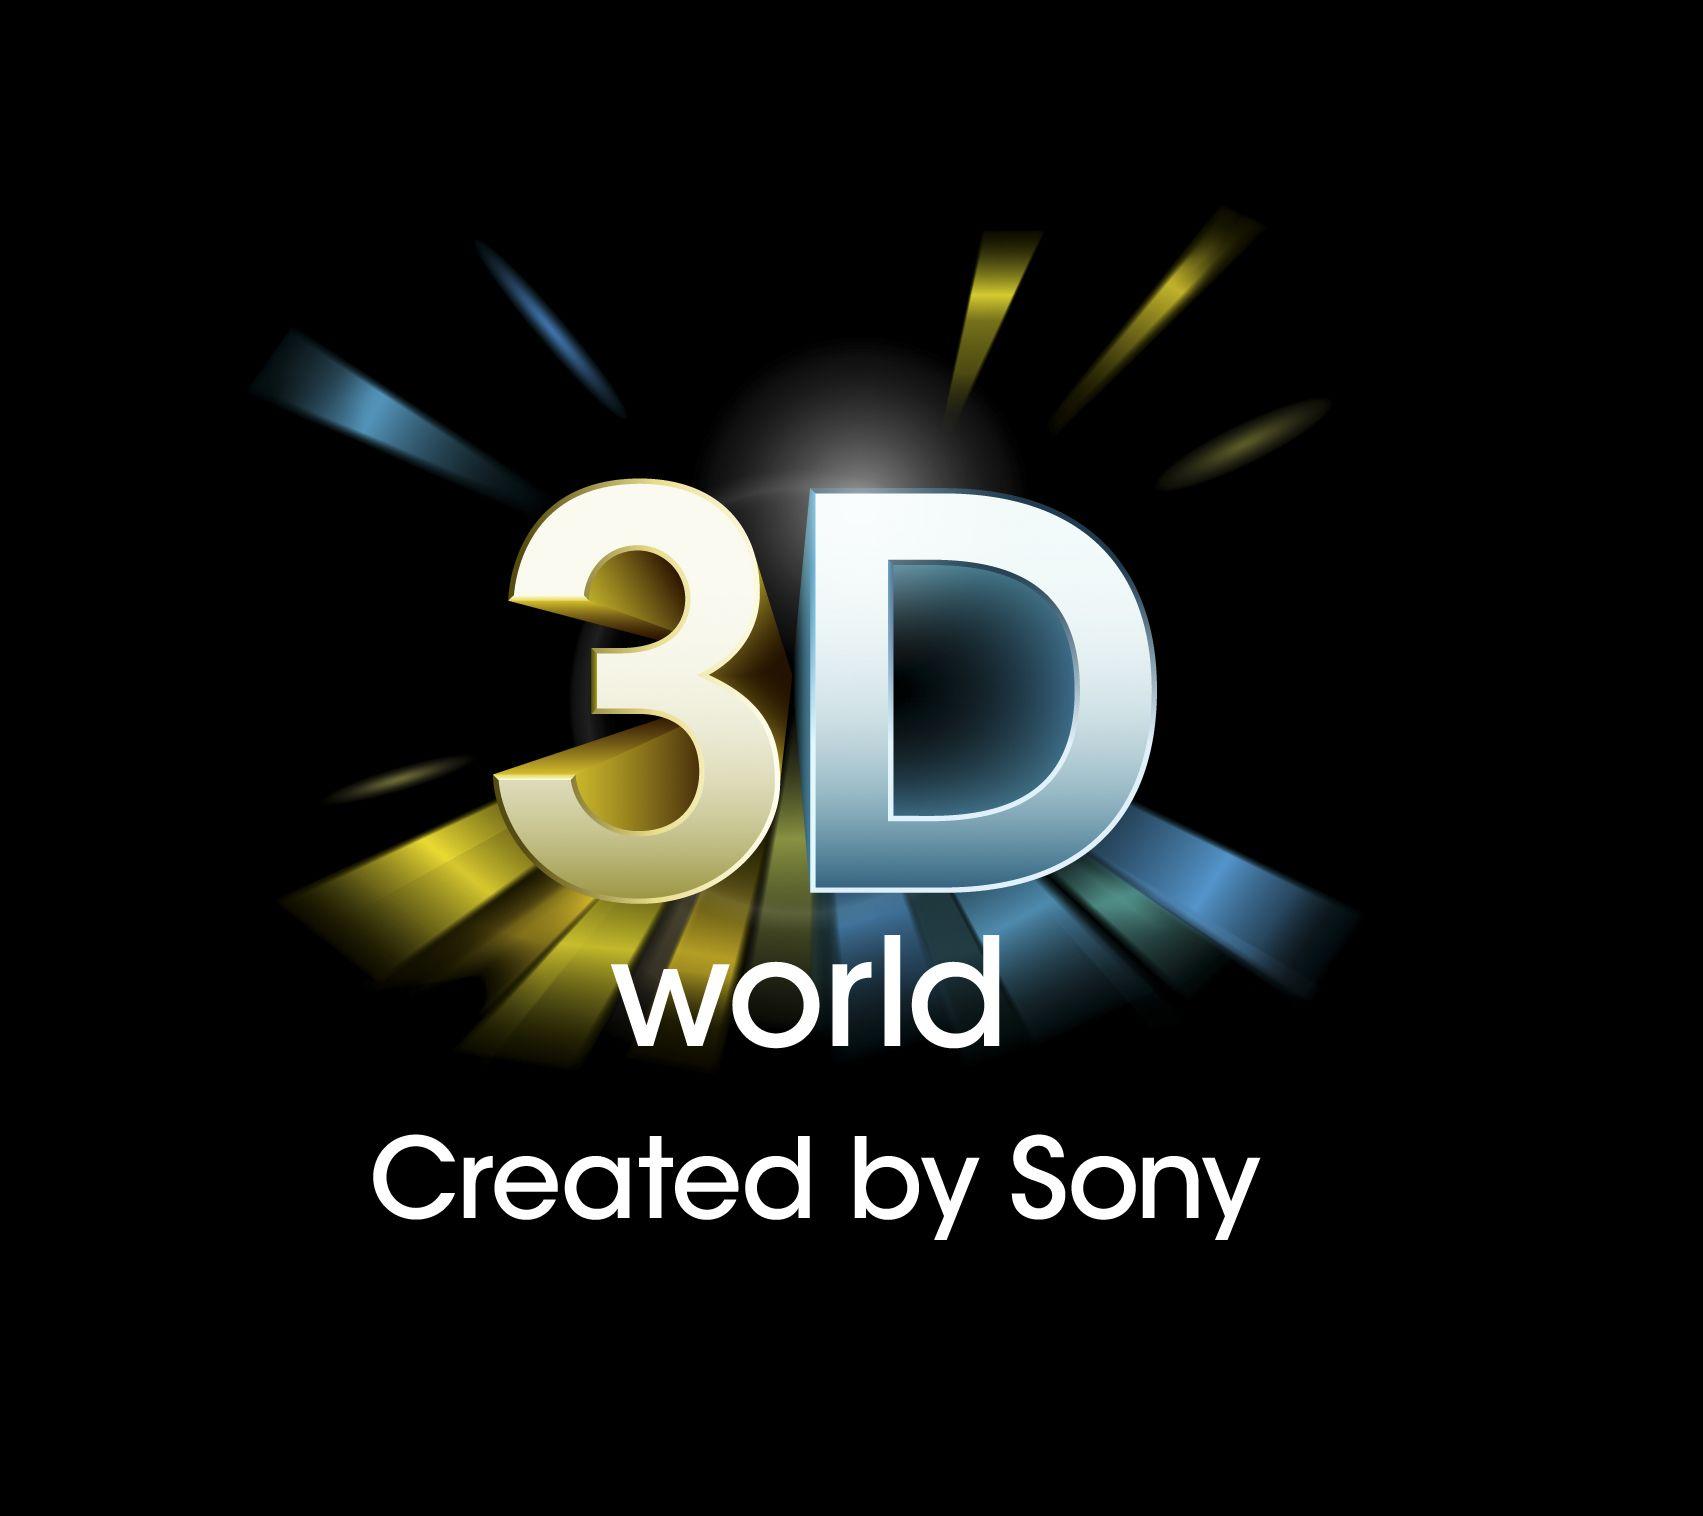 3D World Logo - Image - Logo-3d-world1.jpg | Logo Timeline Wiki | FANDOM powered by ...